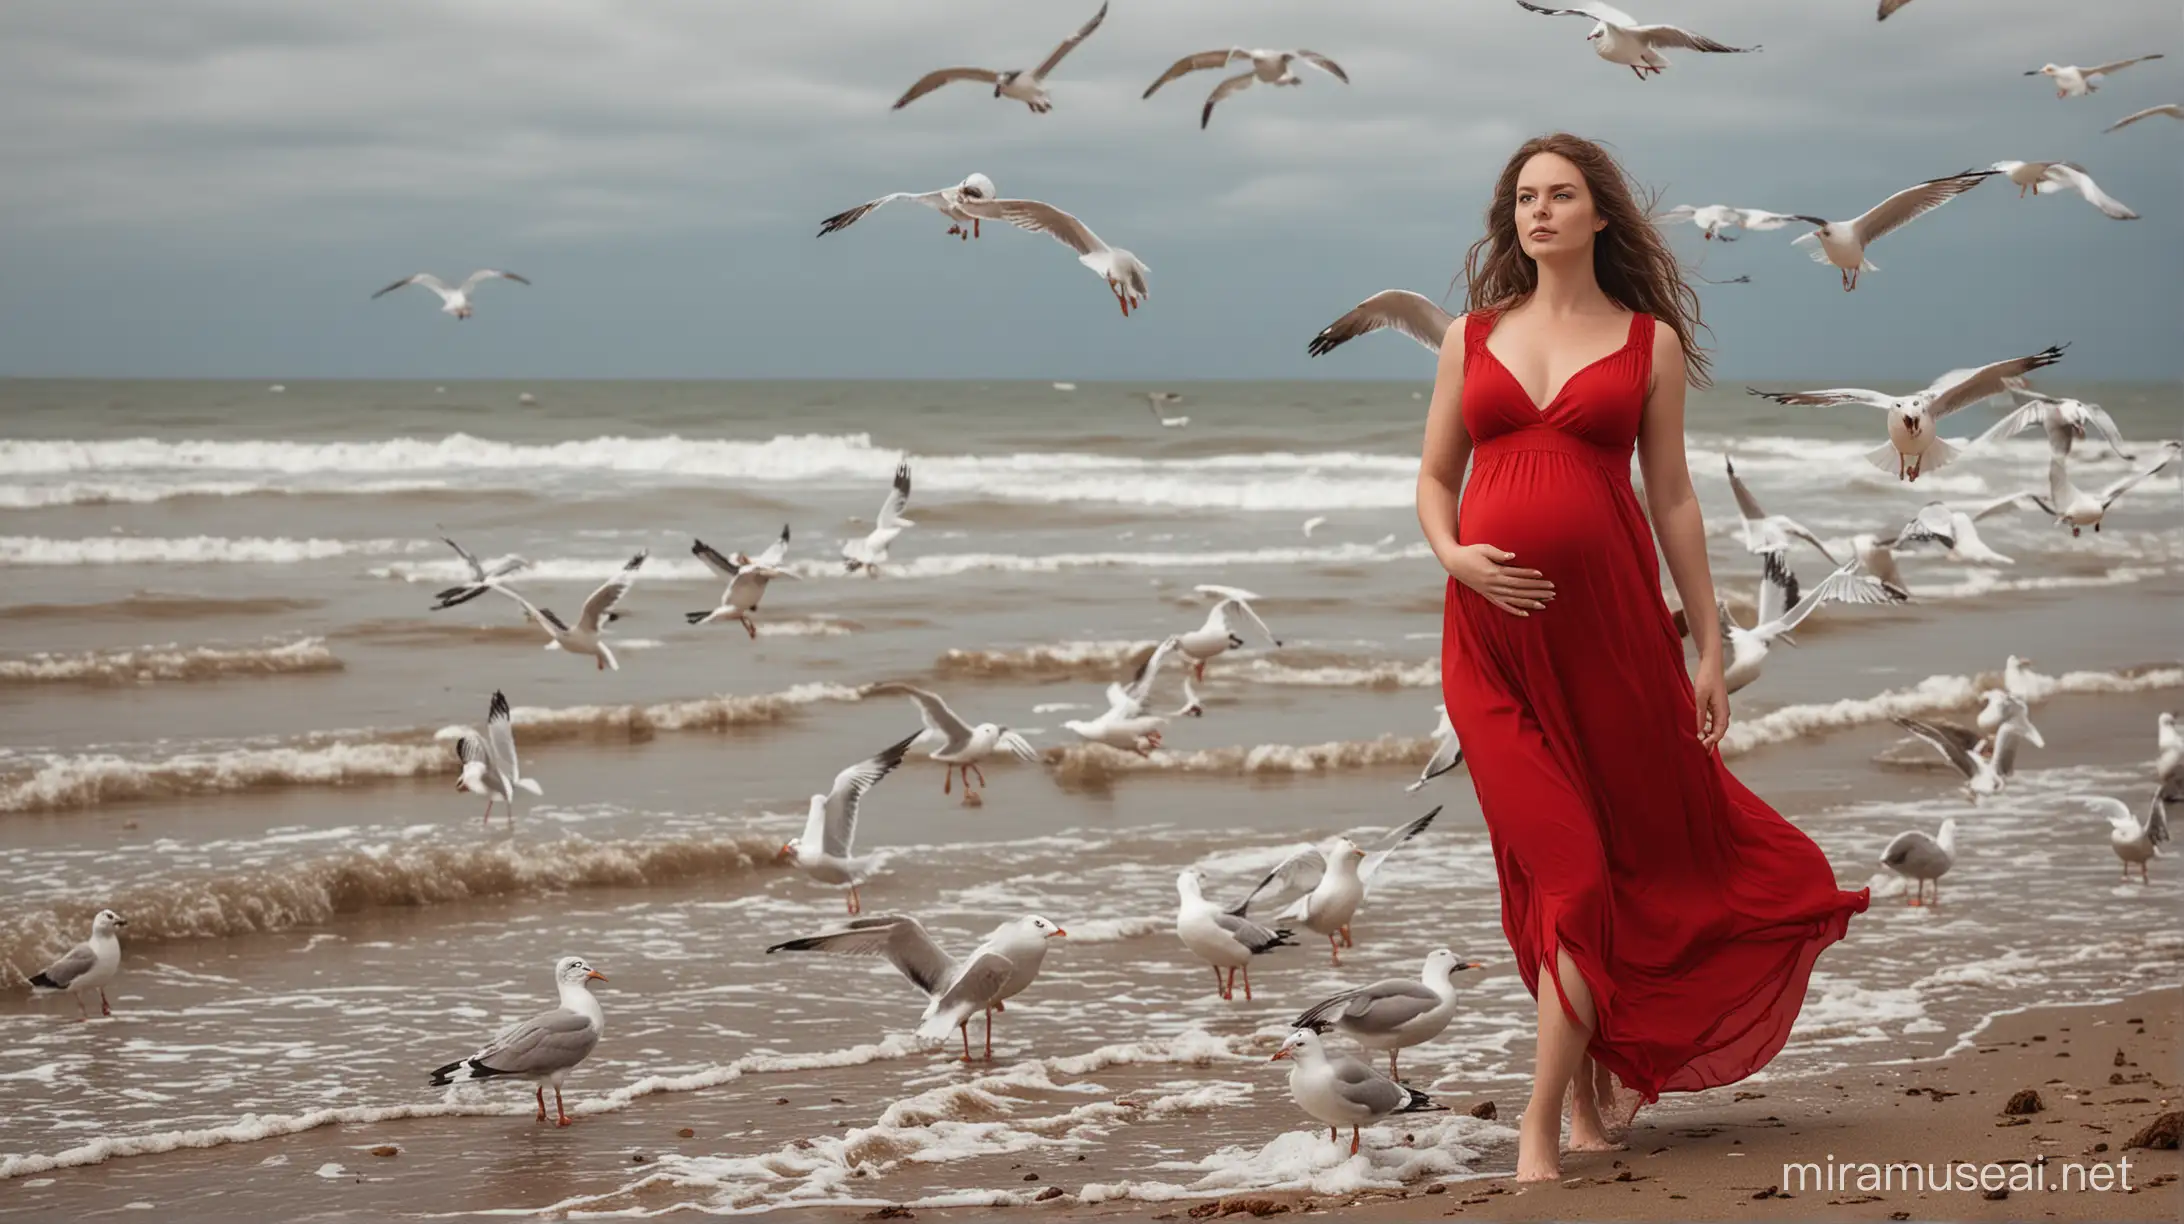 Captivating Maternity Portrait BlueEyed Beauty on Beach with Seagulls